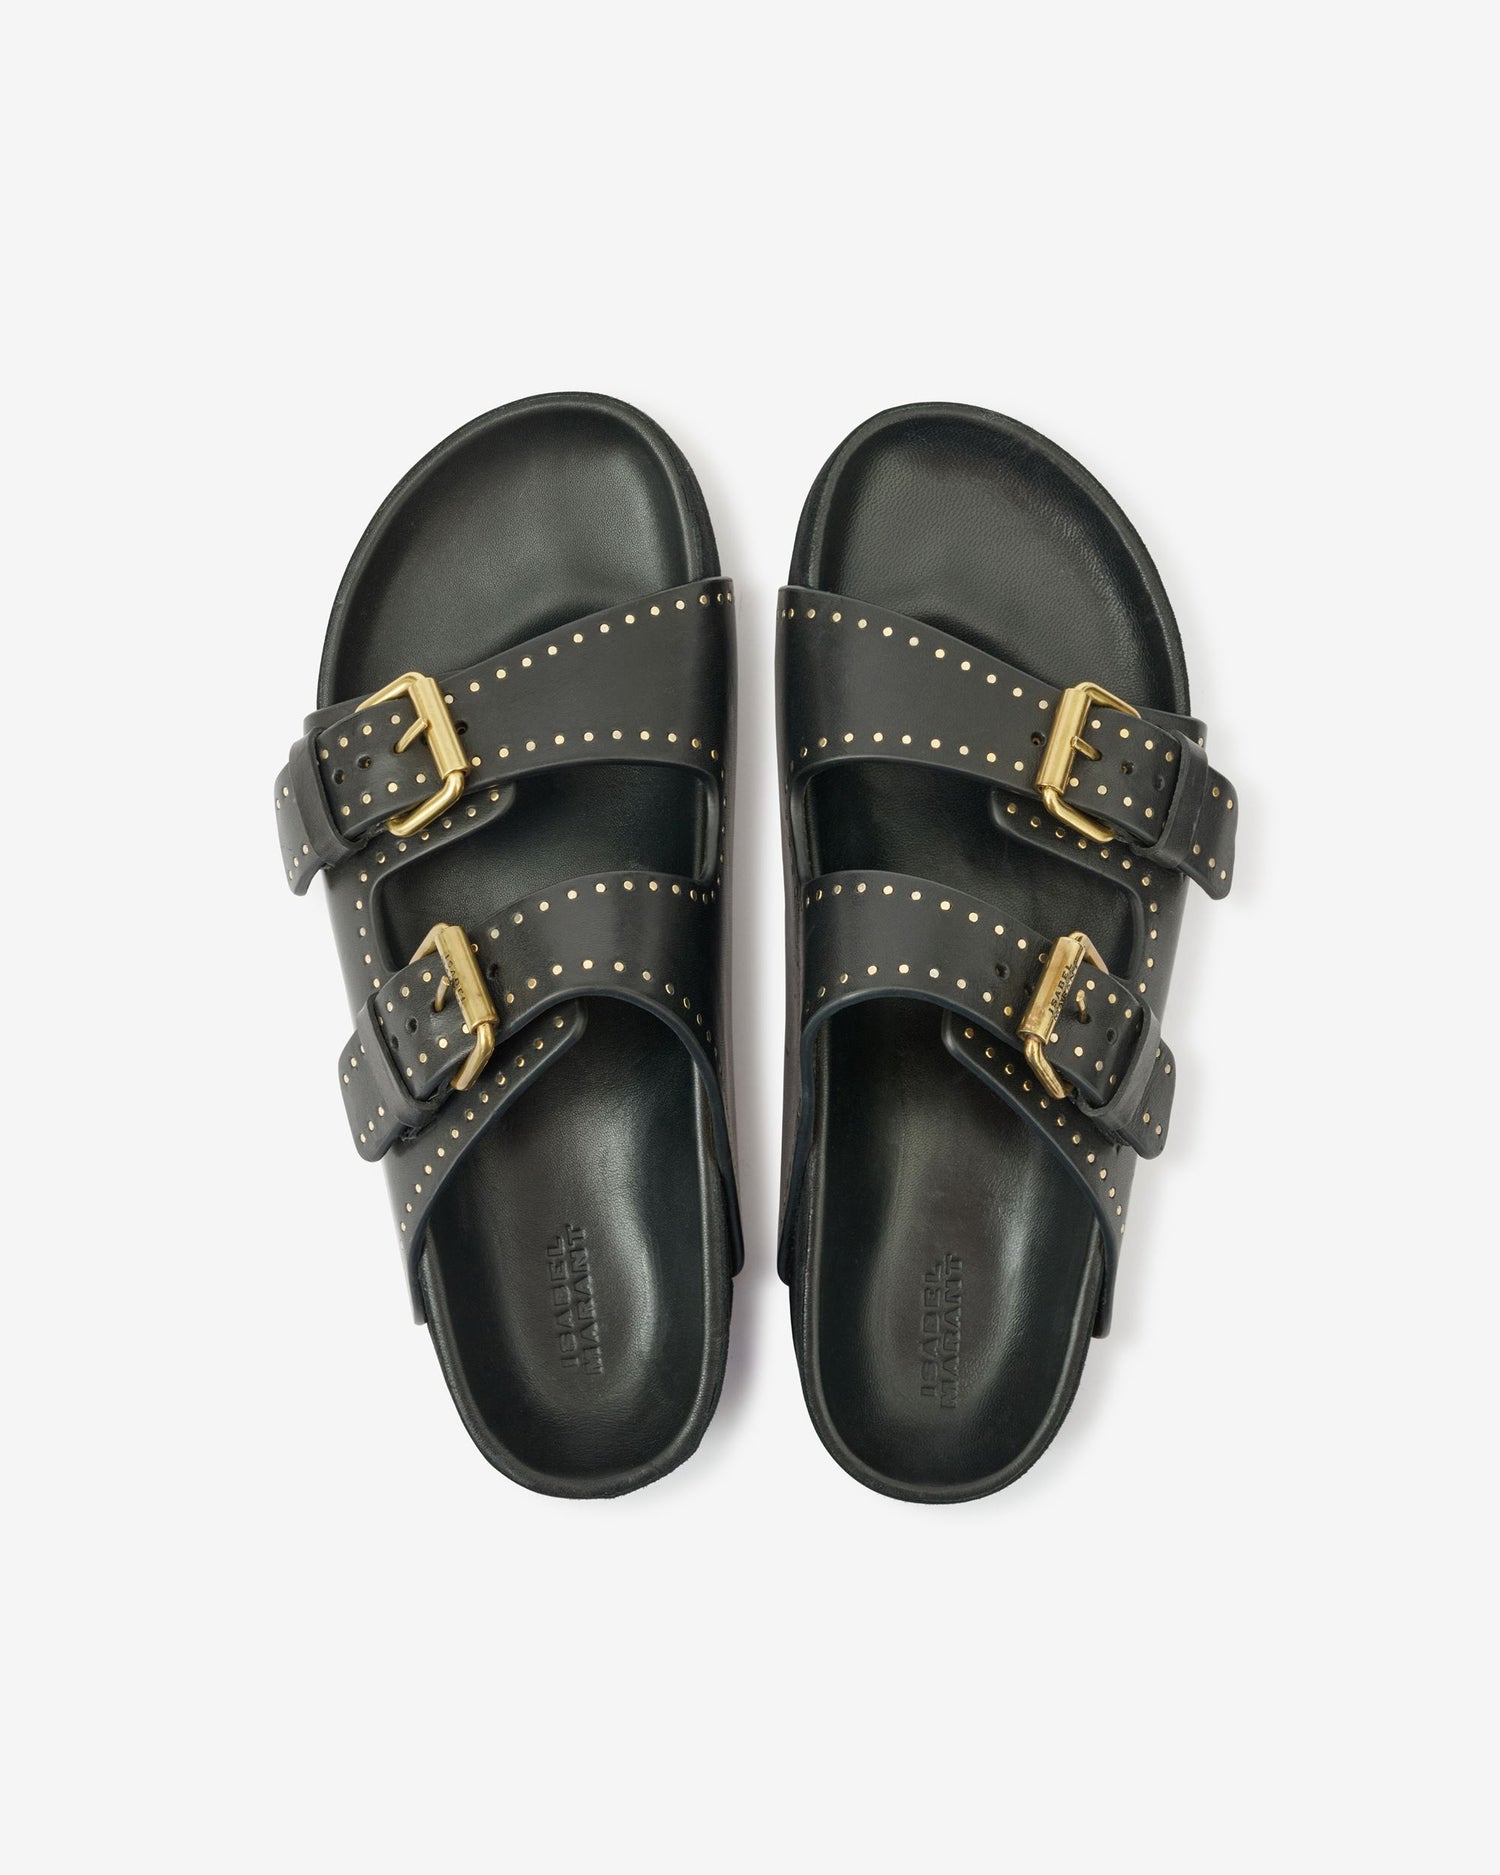 LENNYO sandals, black